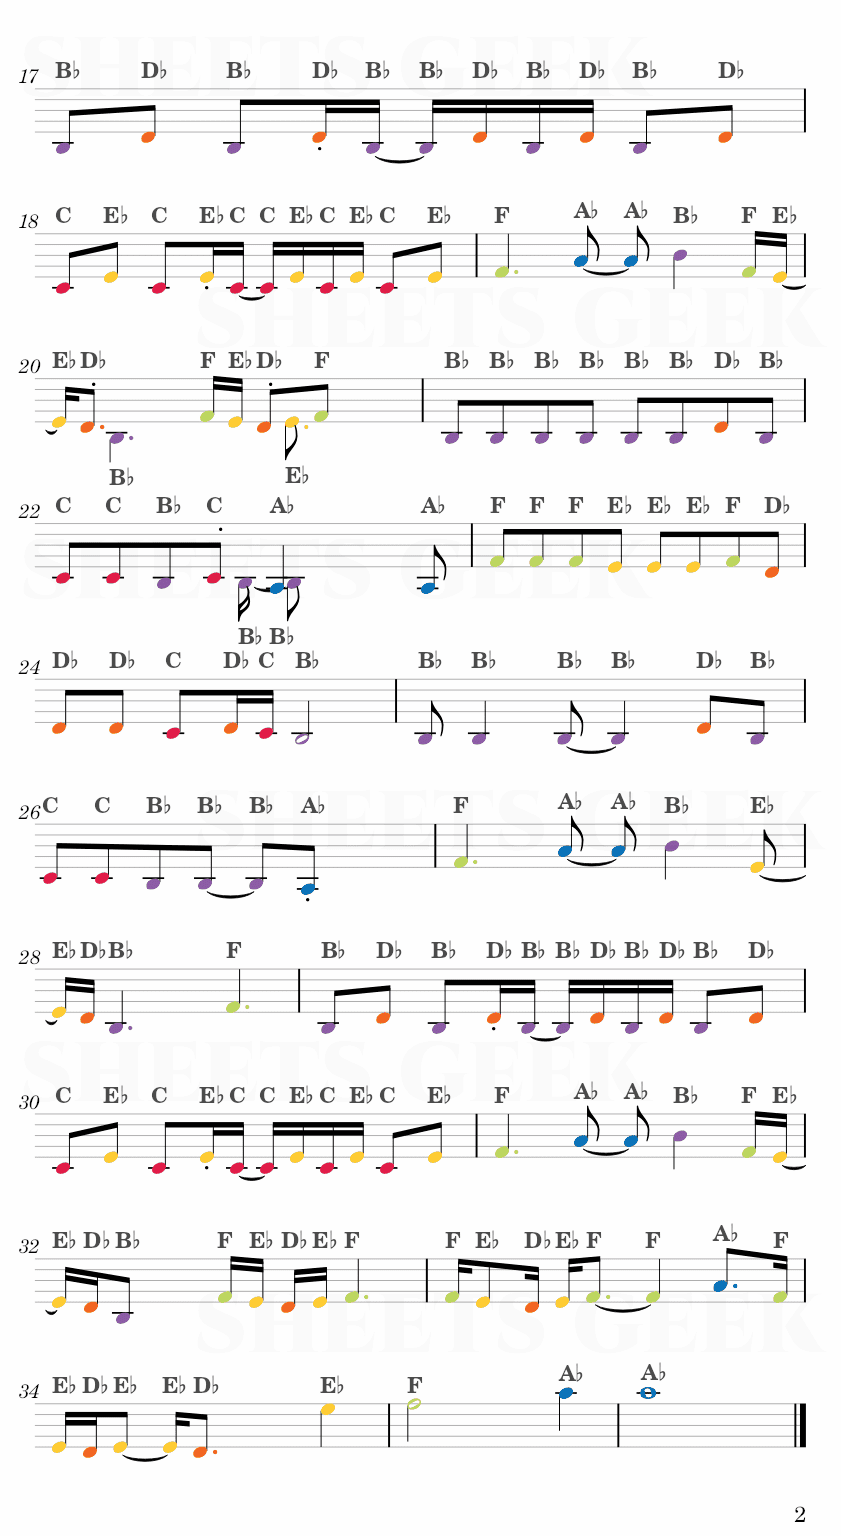 Peaches - Jack Black (The Super Mario Bros. Movie) Easy Sheet Music Free for piano, keyboard, flute, violin, sax, cello page 2